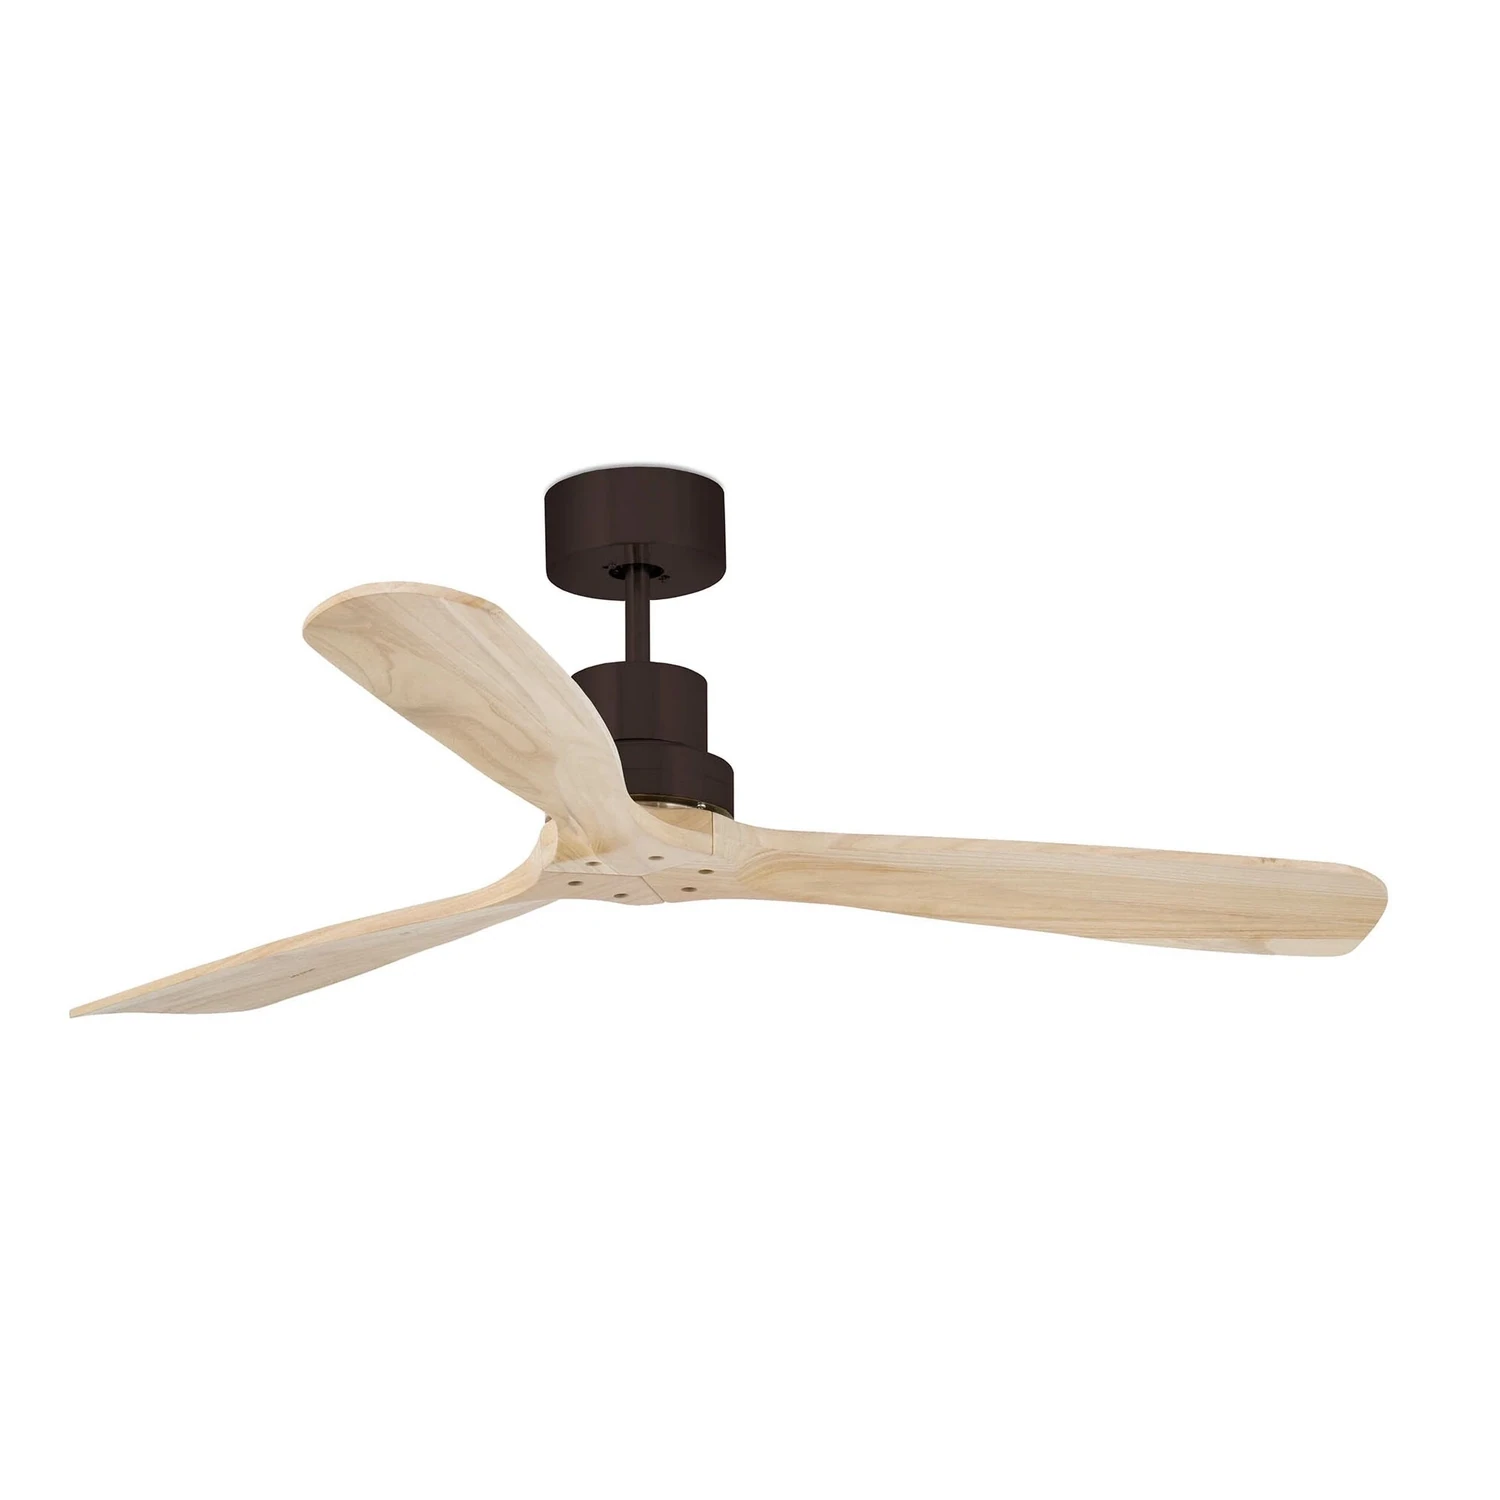 LANTAU L Dark Brown / Pine solid wood blades ceiling fan Ø132cm with remote control included